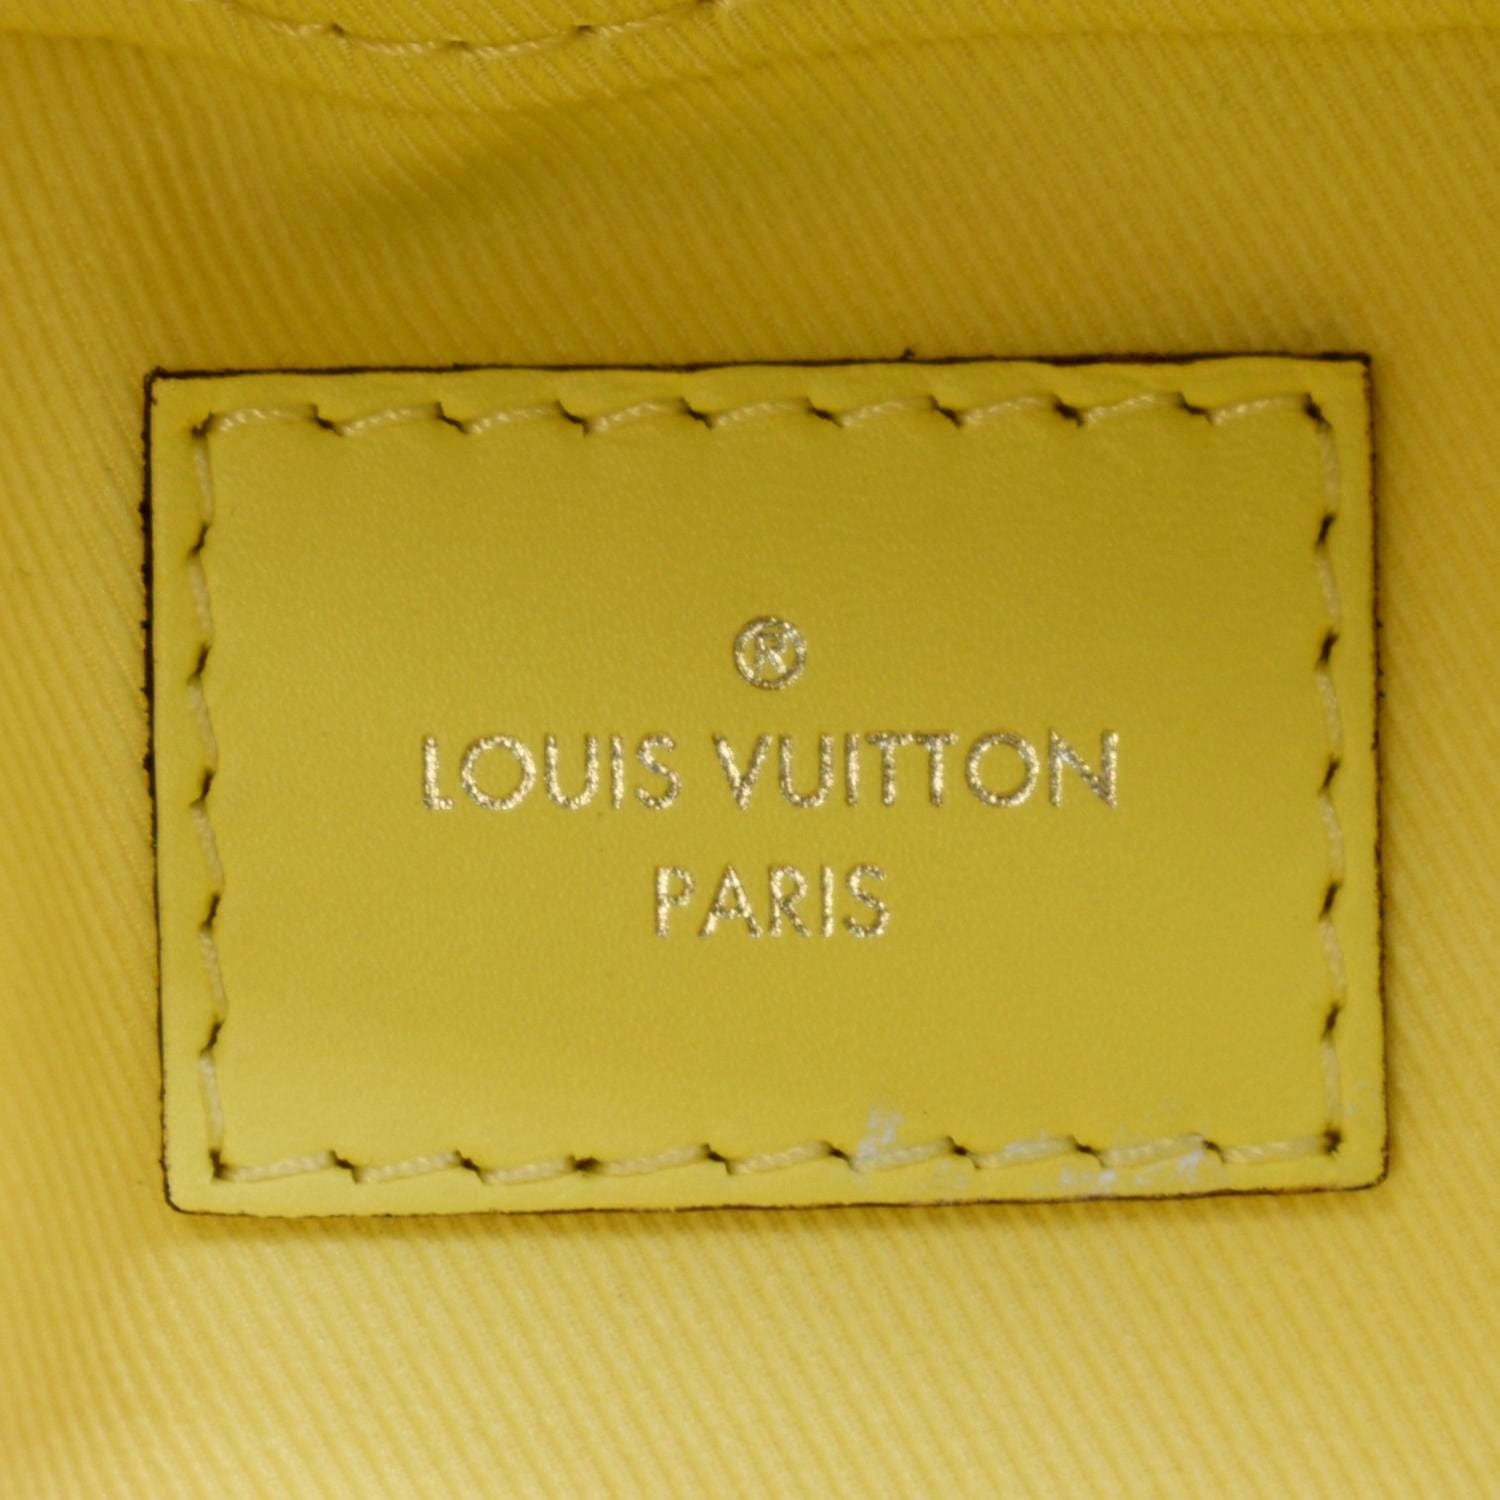 Louis Vuitton Saintonge Crossbody Purse for Sale in Peoria, AZ